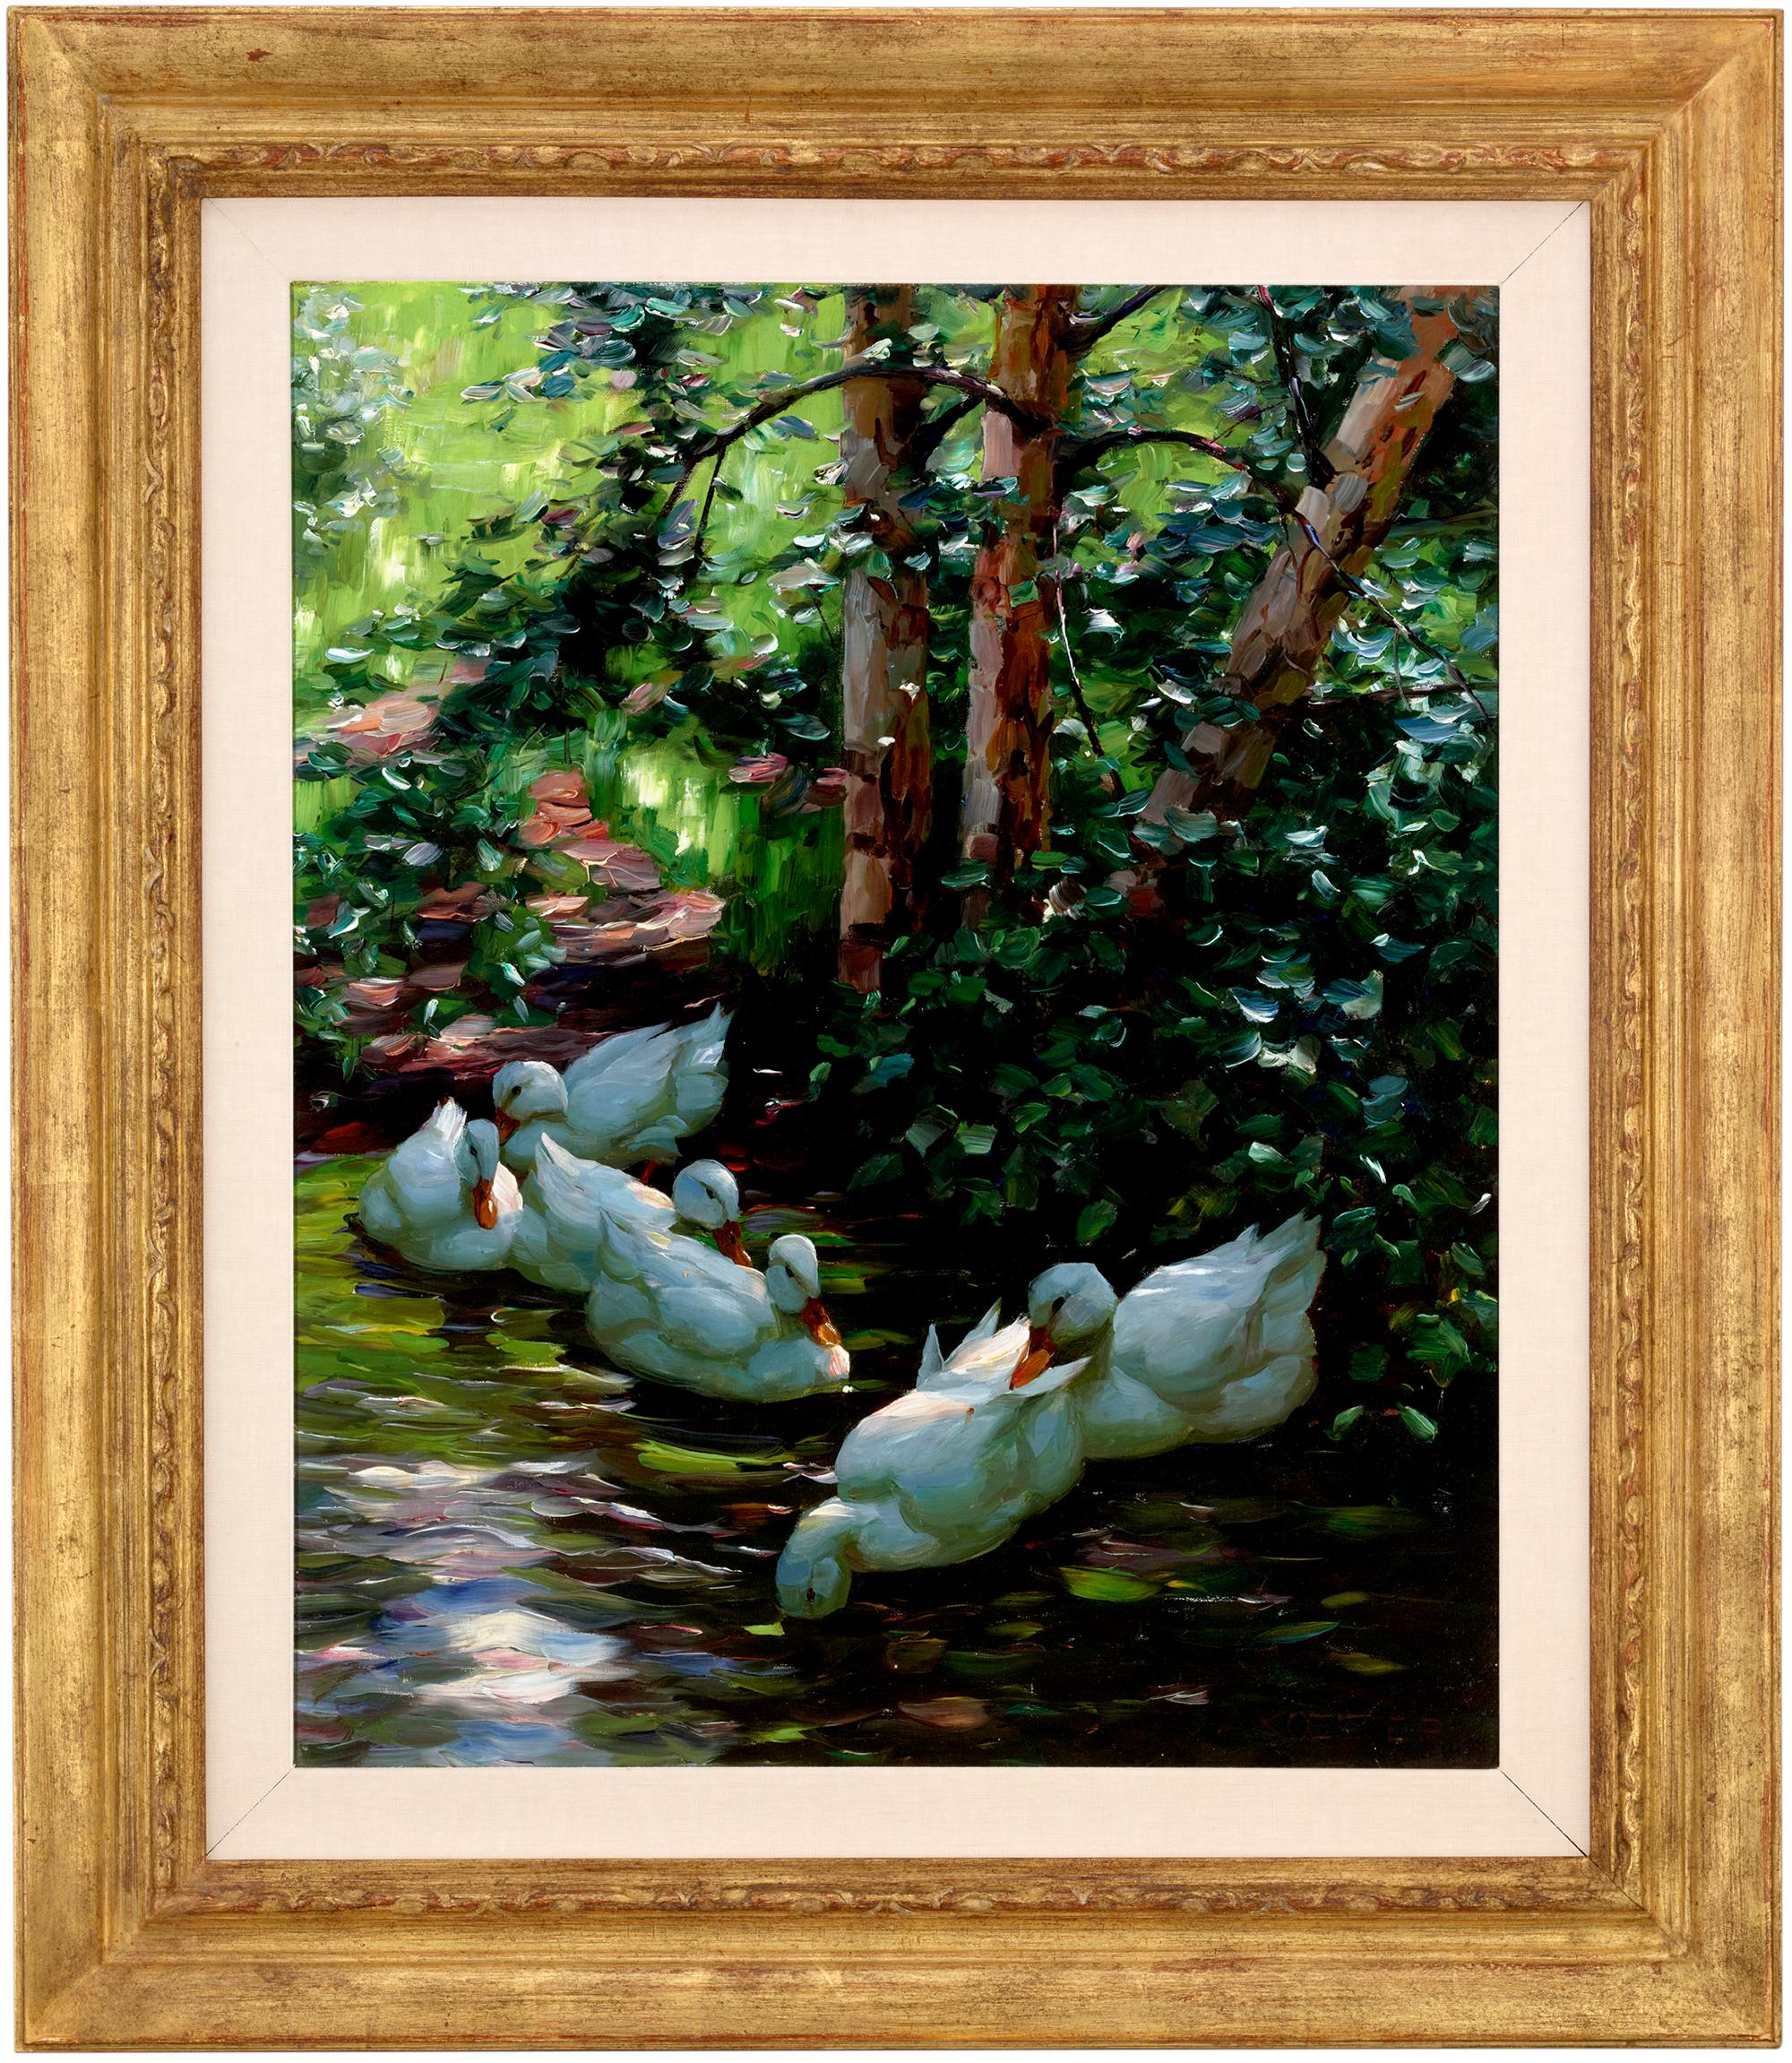 Sechs Enten im Wasser (Six Ducks in the Water)  - Painting by Alexander Koester